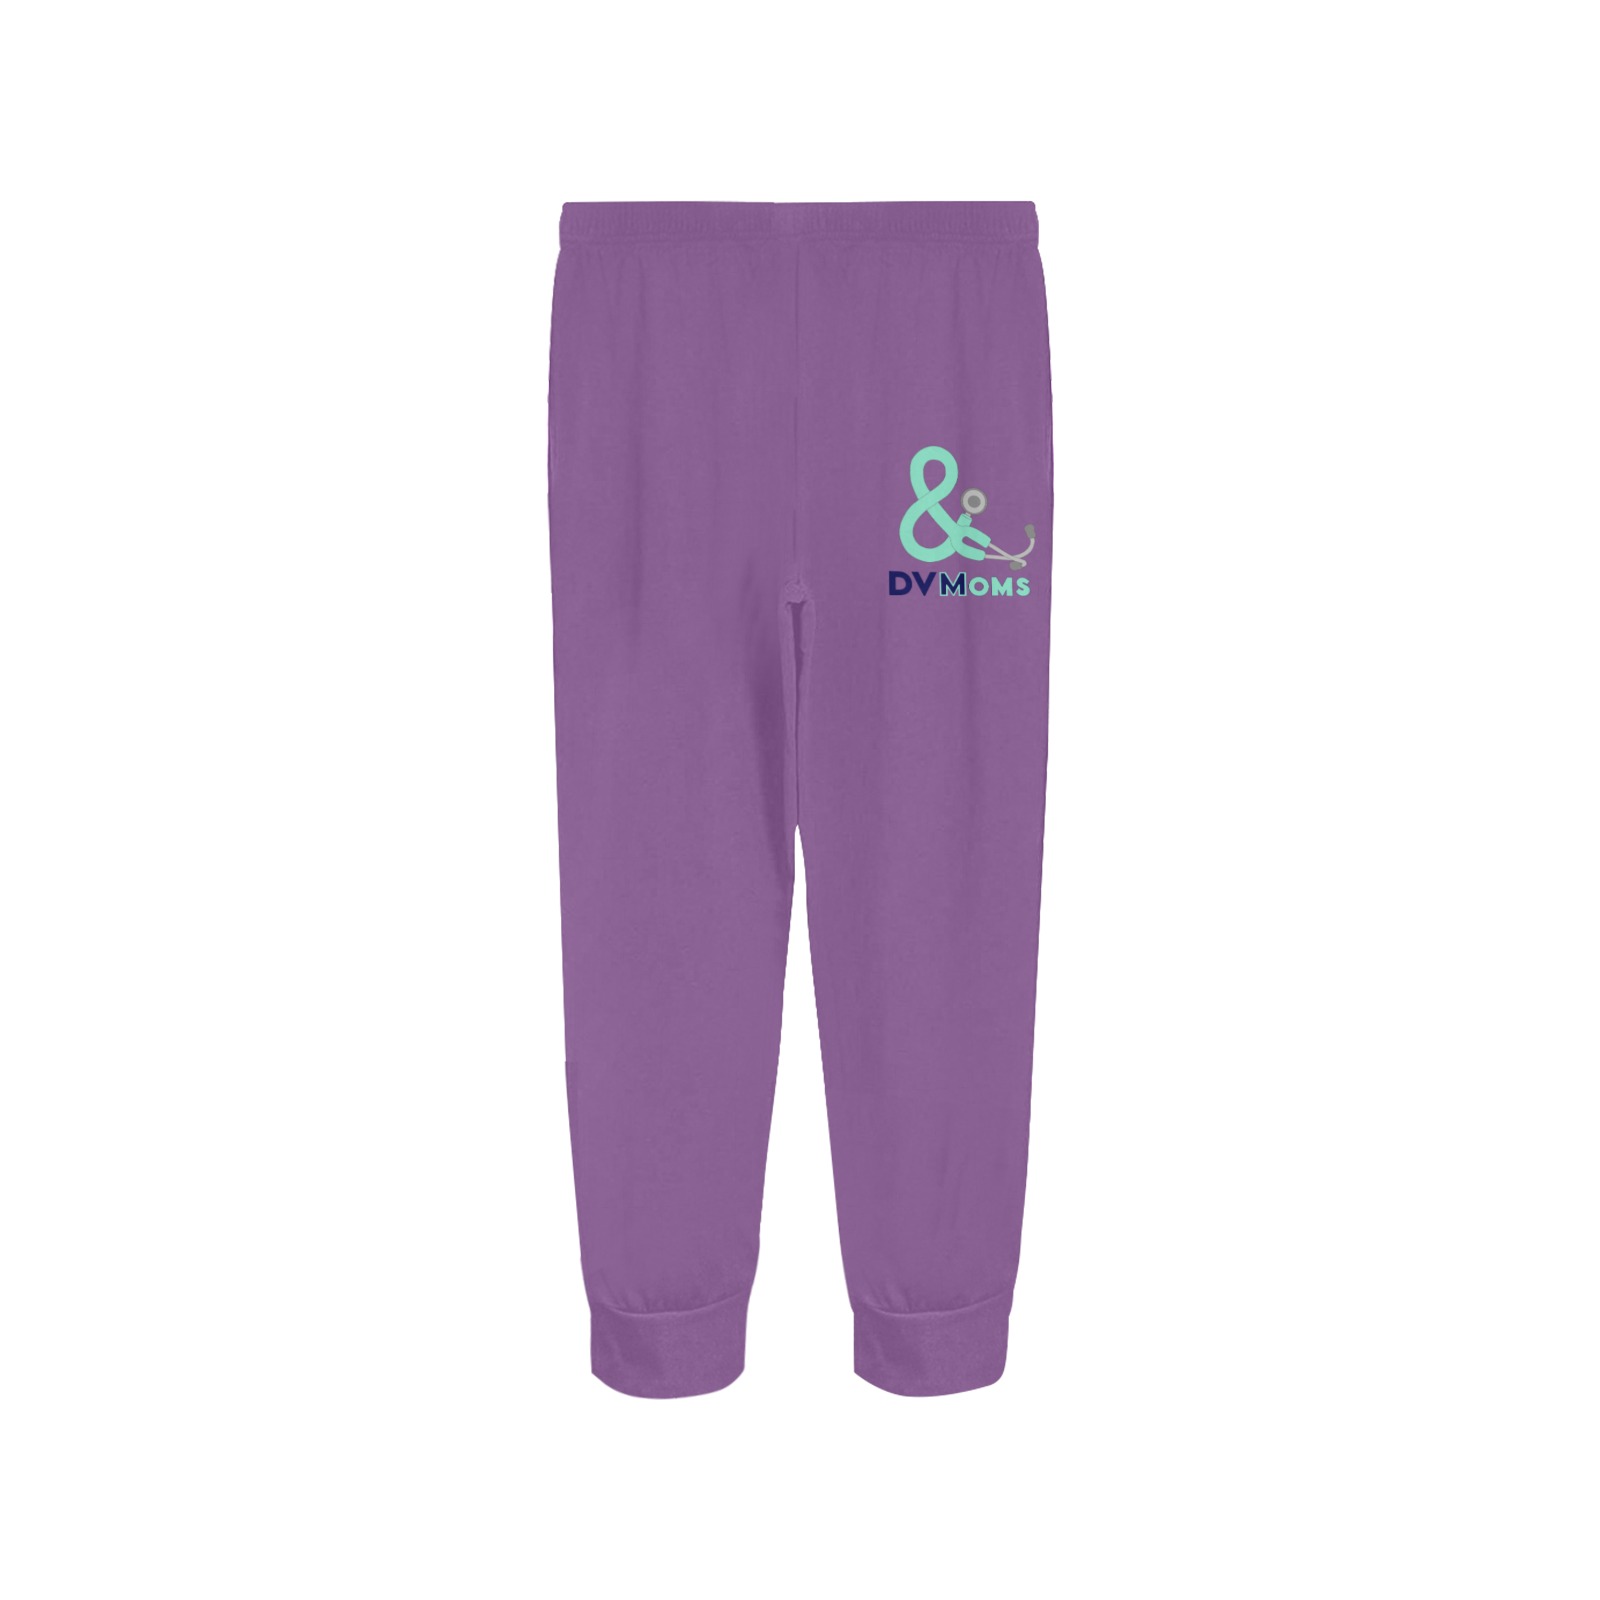 Pants purple with single logo Women's All Over Print Pajama Trousers